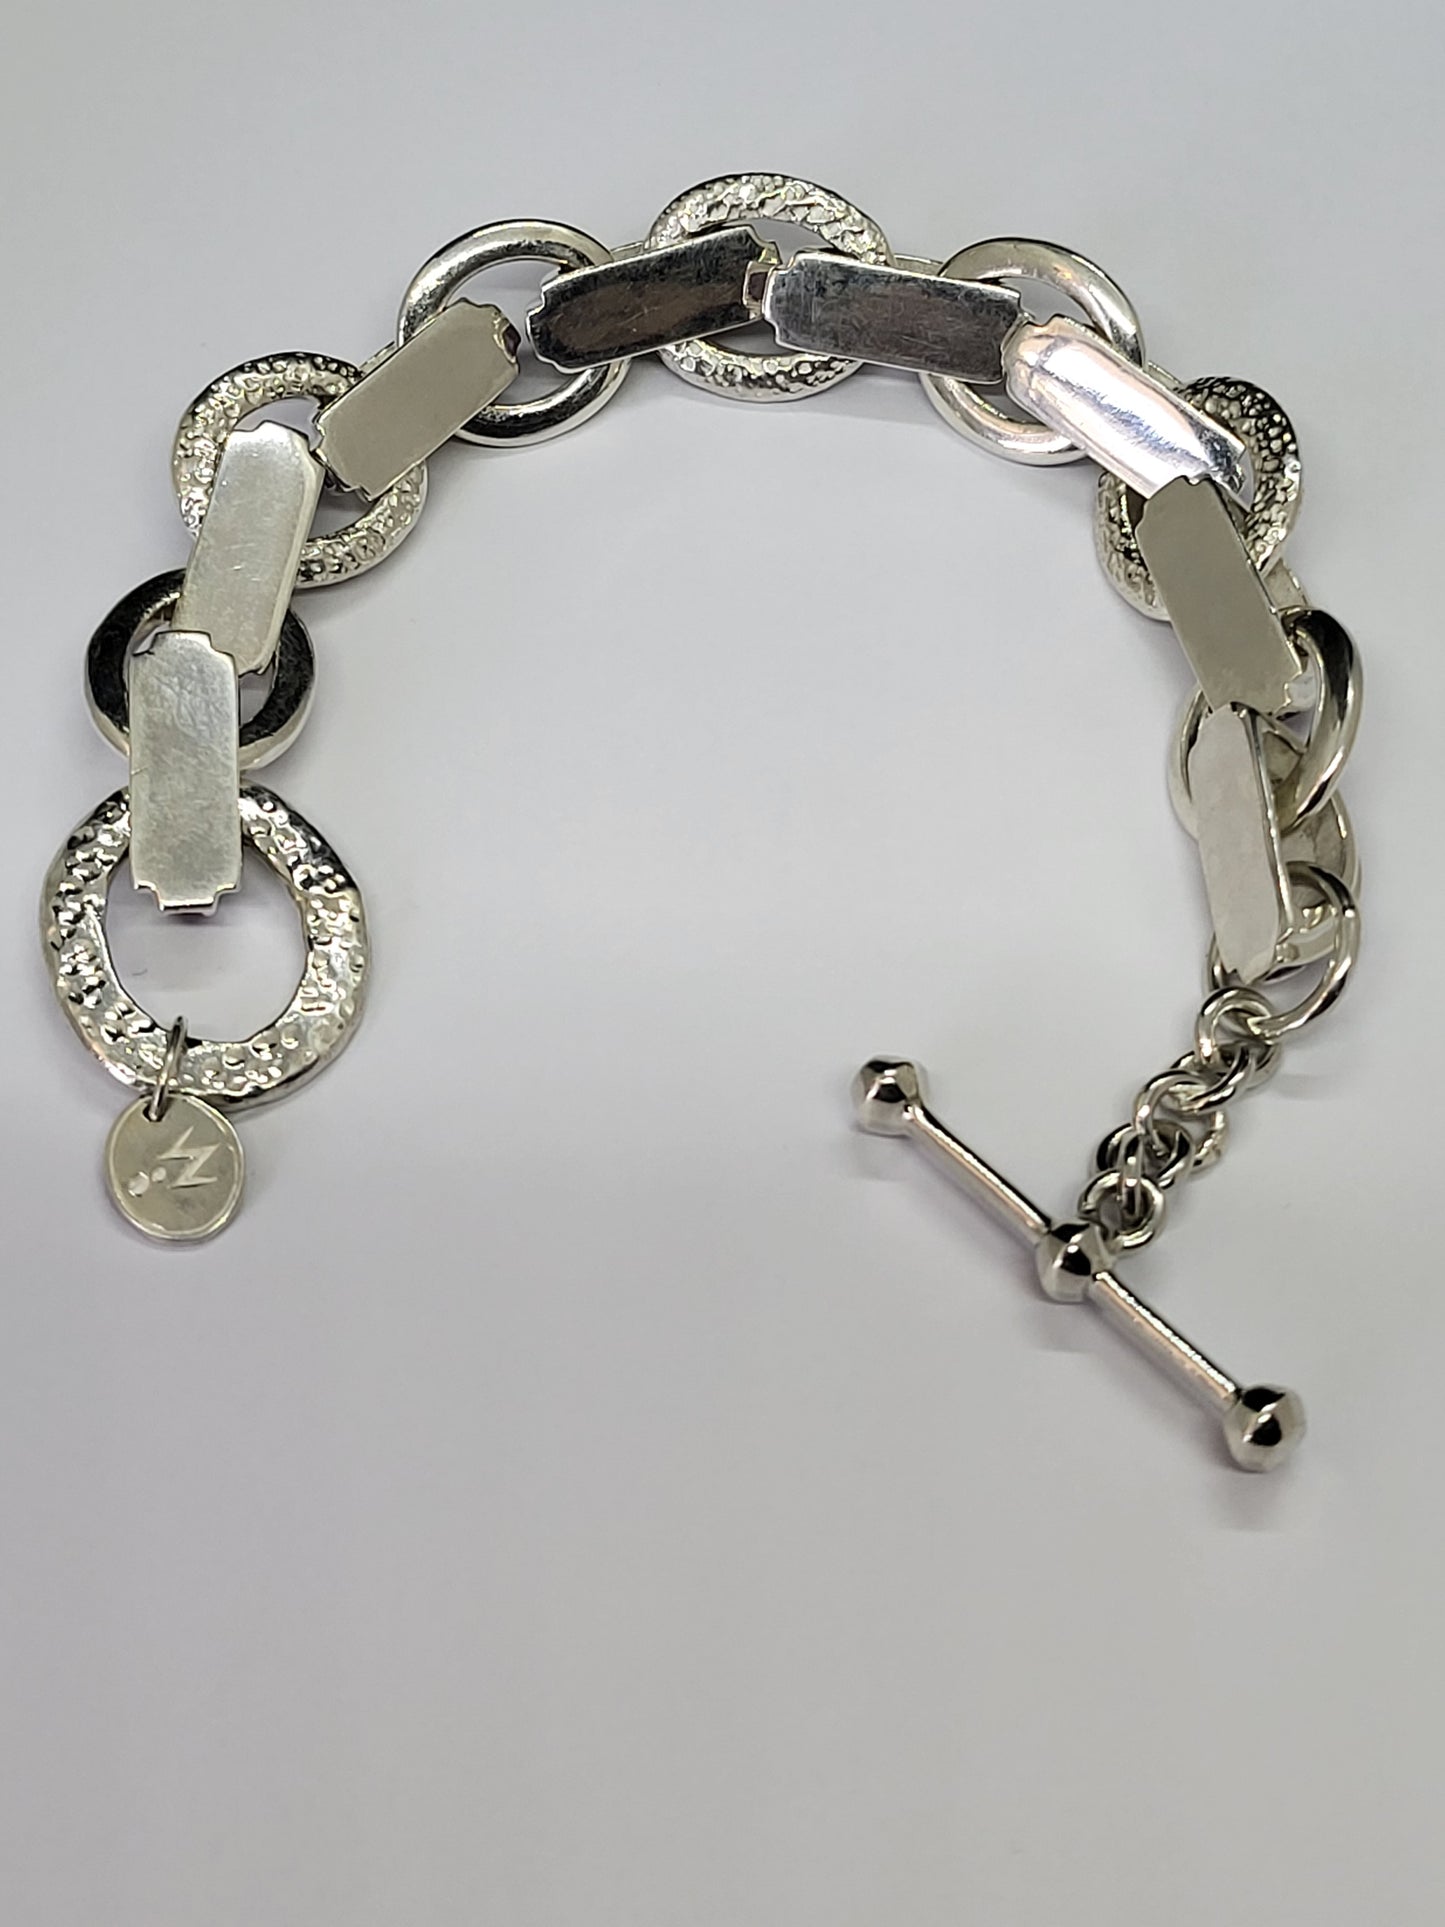 McQueens Custom .925 Hammered Sterling Silver Bracelet Black Spinel Inlay 9"